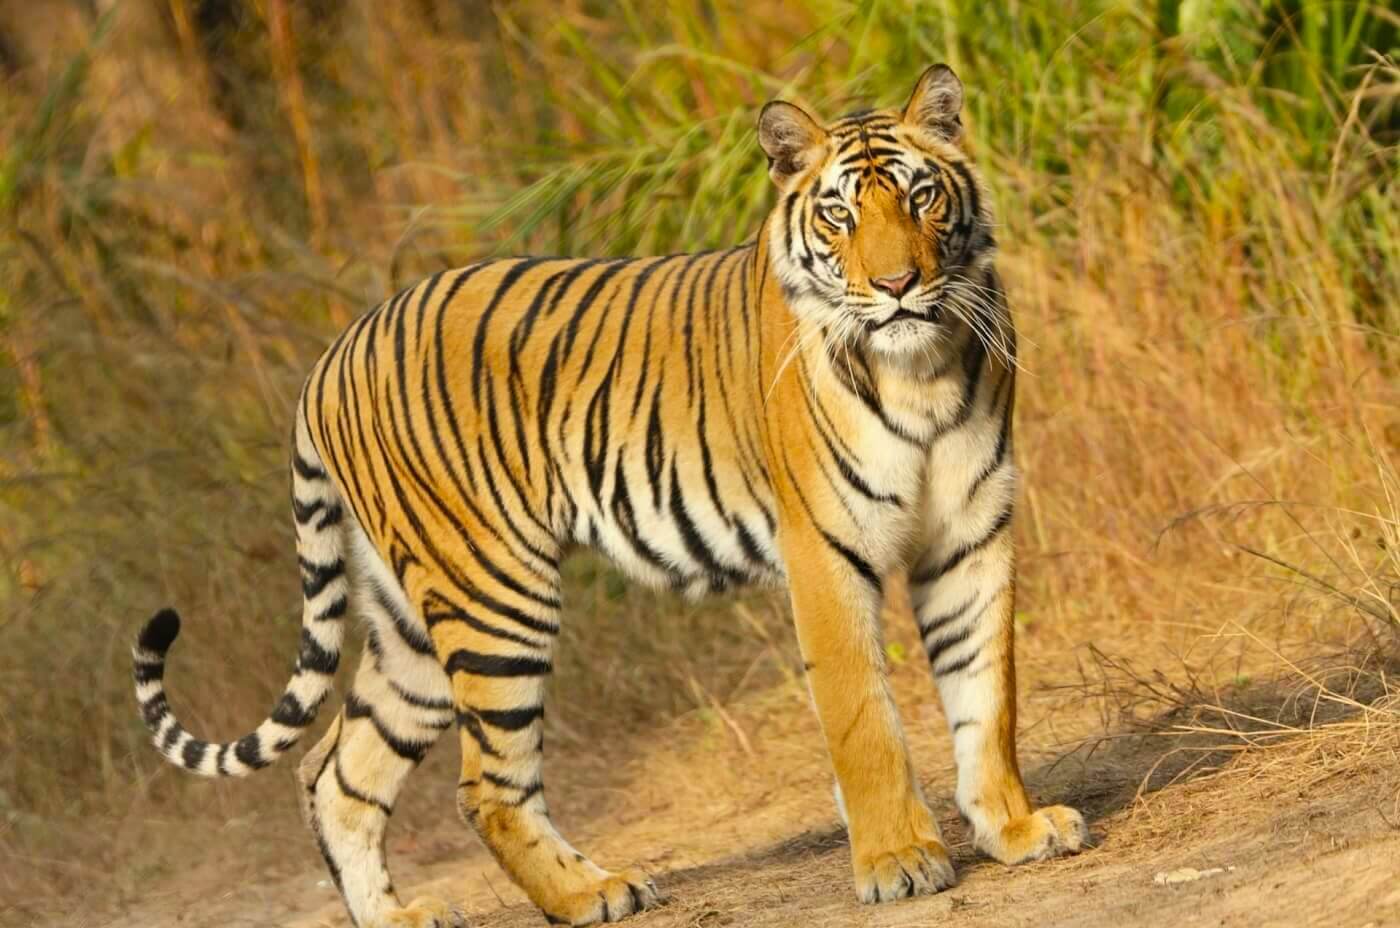 A tiger walking through a national park